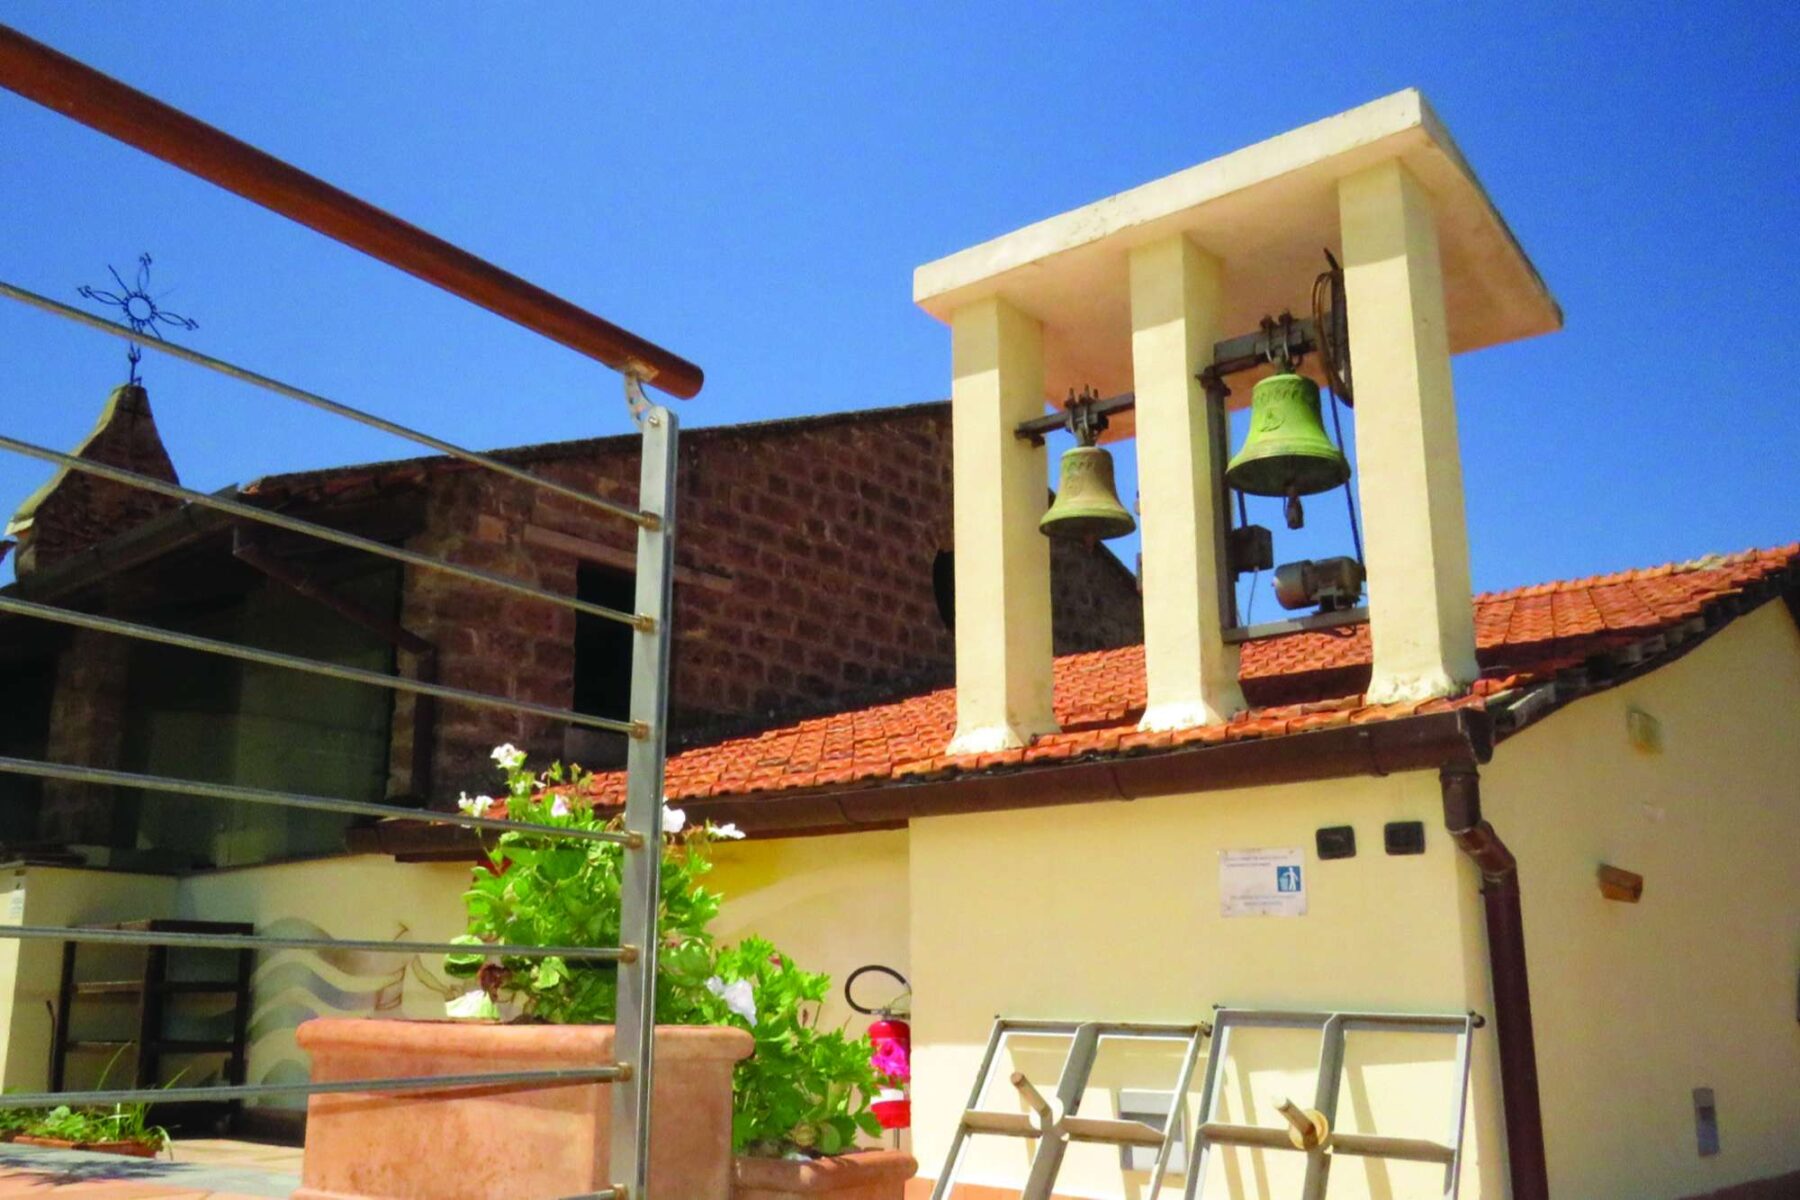 edu italy seven hostel roof bells